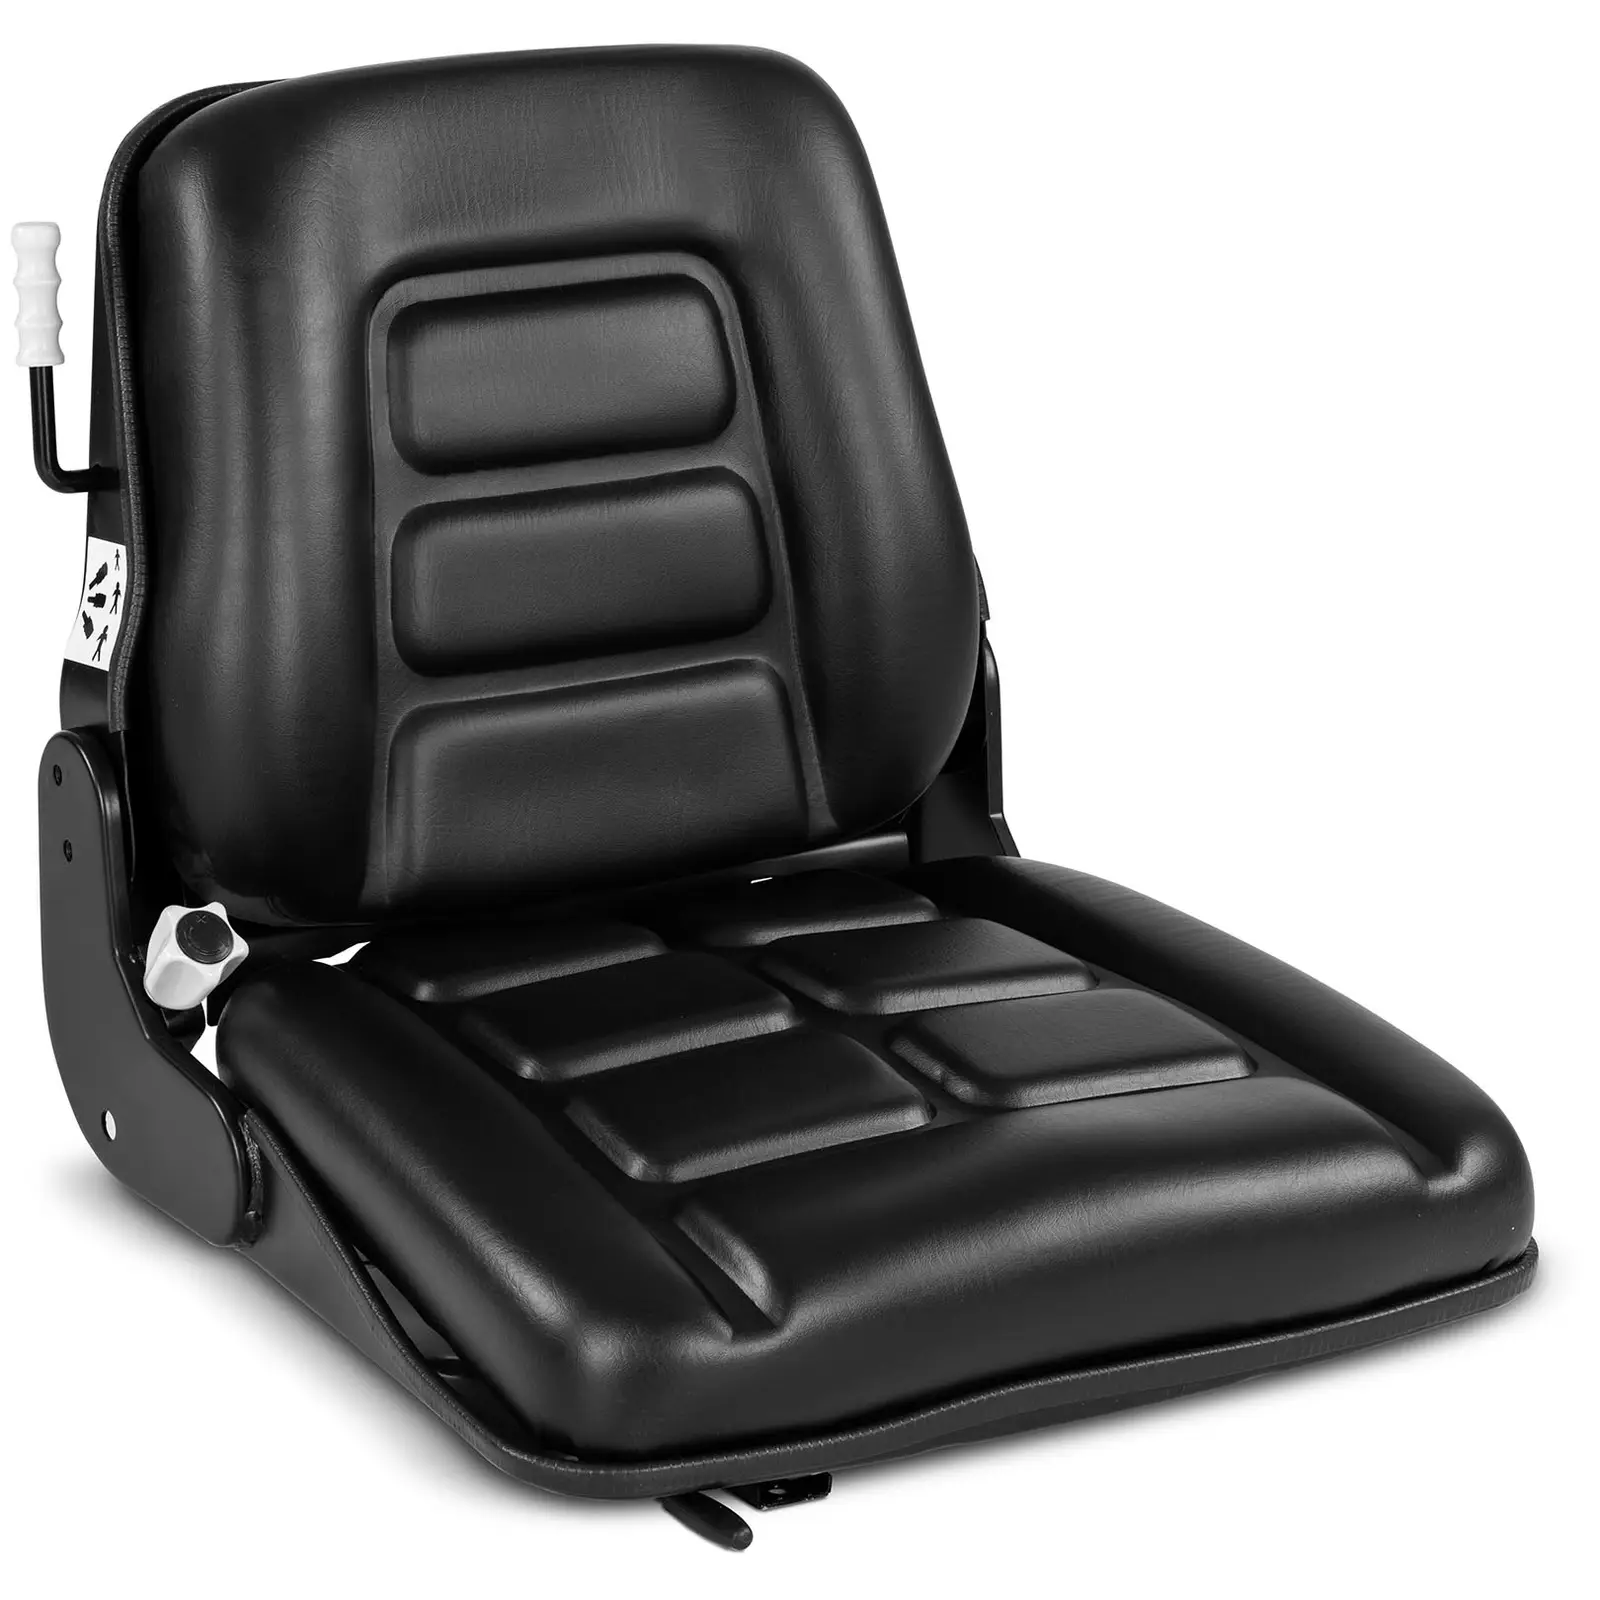 Tractor seat - 46 x 42 cm - adjustable